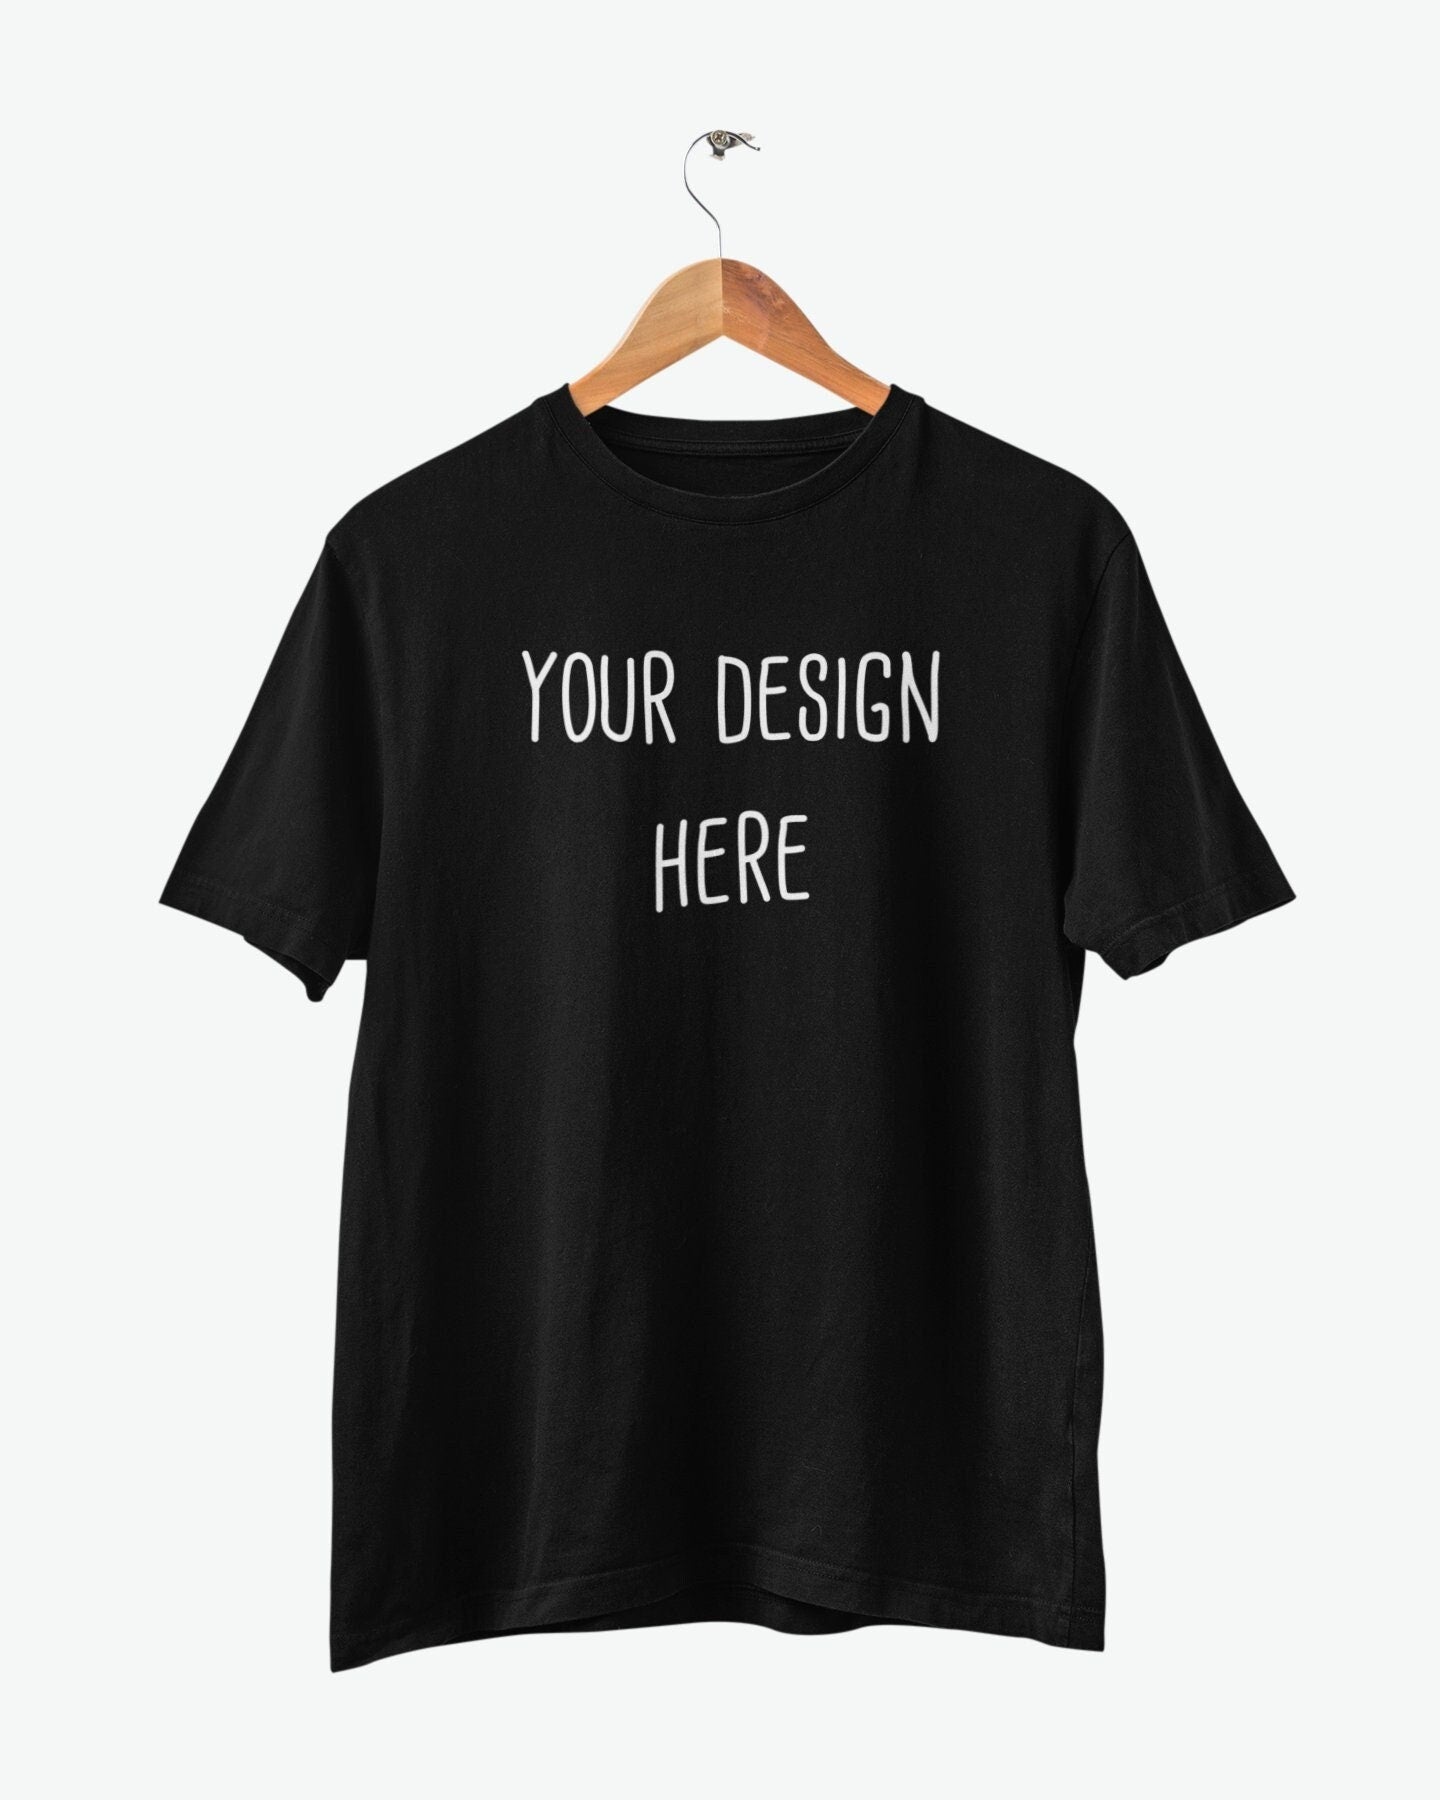 Unisex Personalised T-Shirt, Your Text, Any Text, Your Design here, Custom t-shirt, bespoke t-shirt, men's t-shirt, women's T-shirt